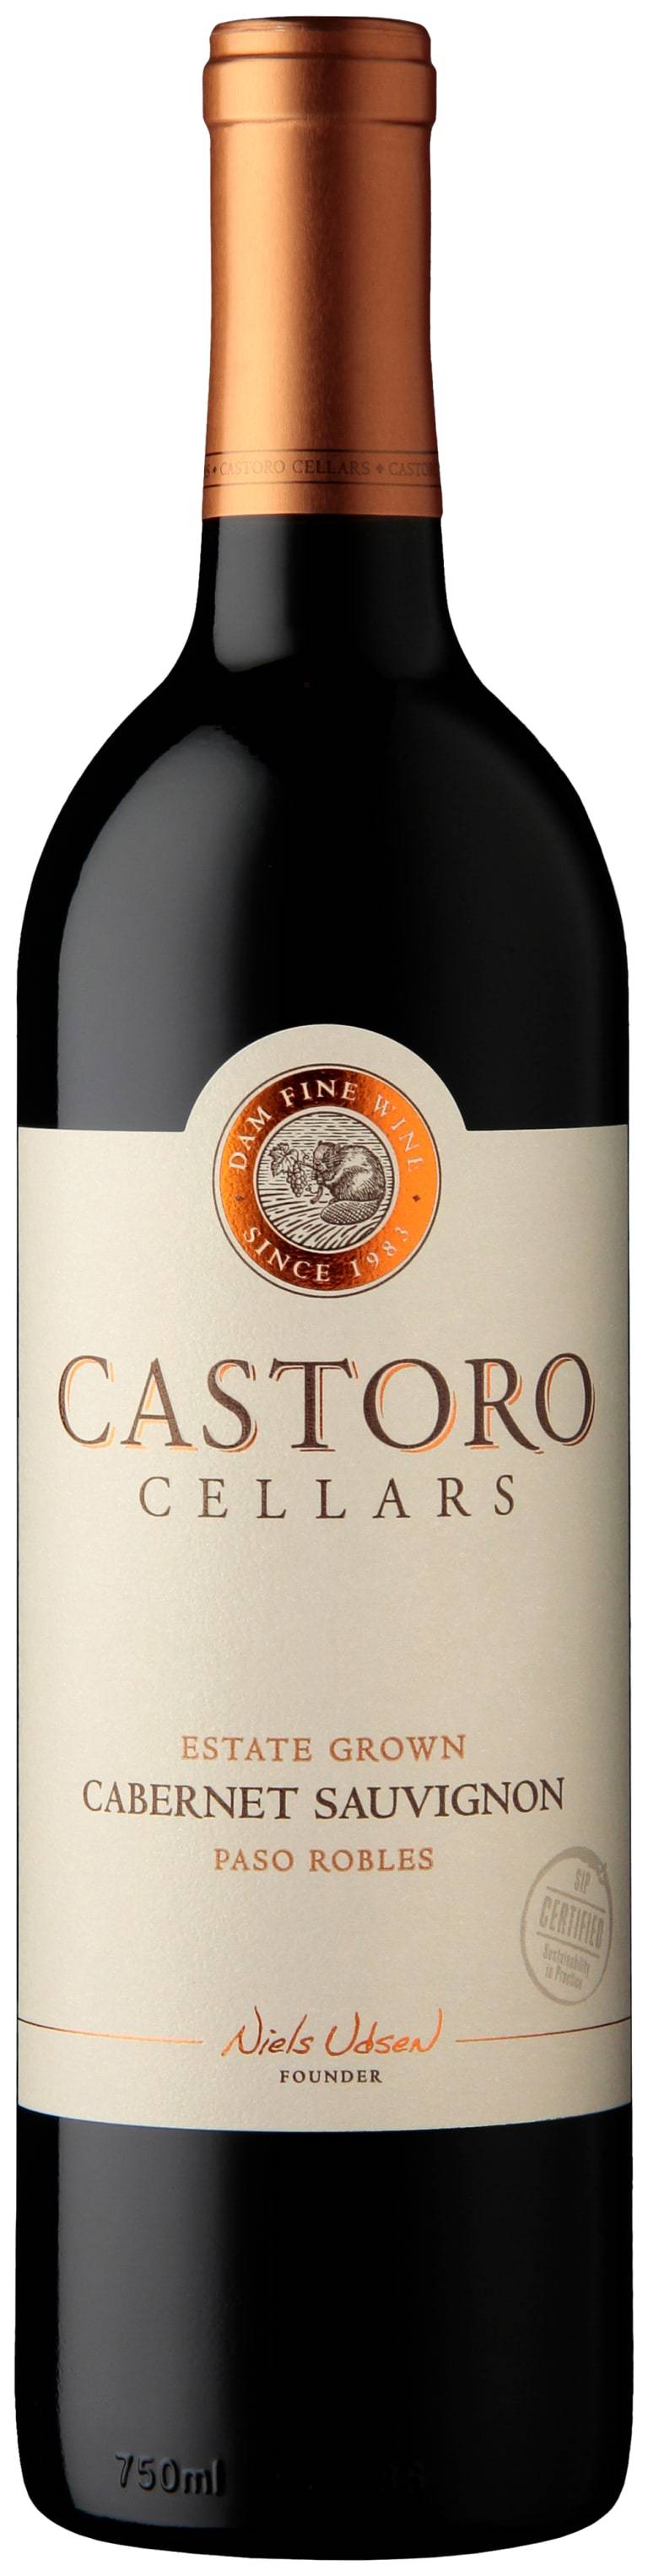 Castoro Cellars Cabernet Sauvignon 2017